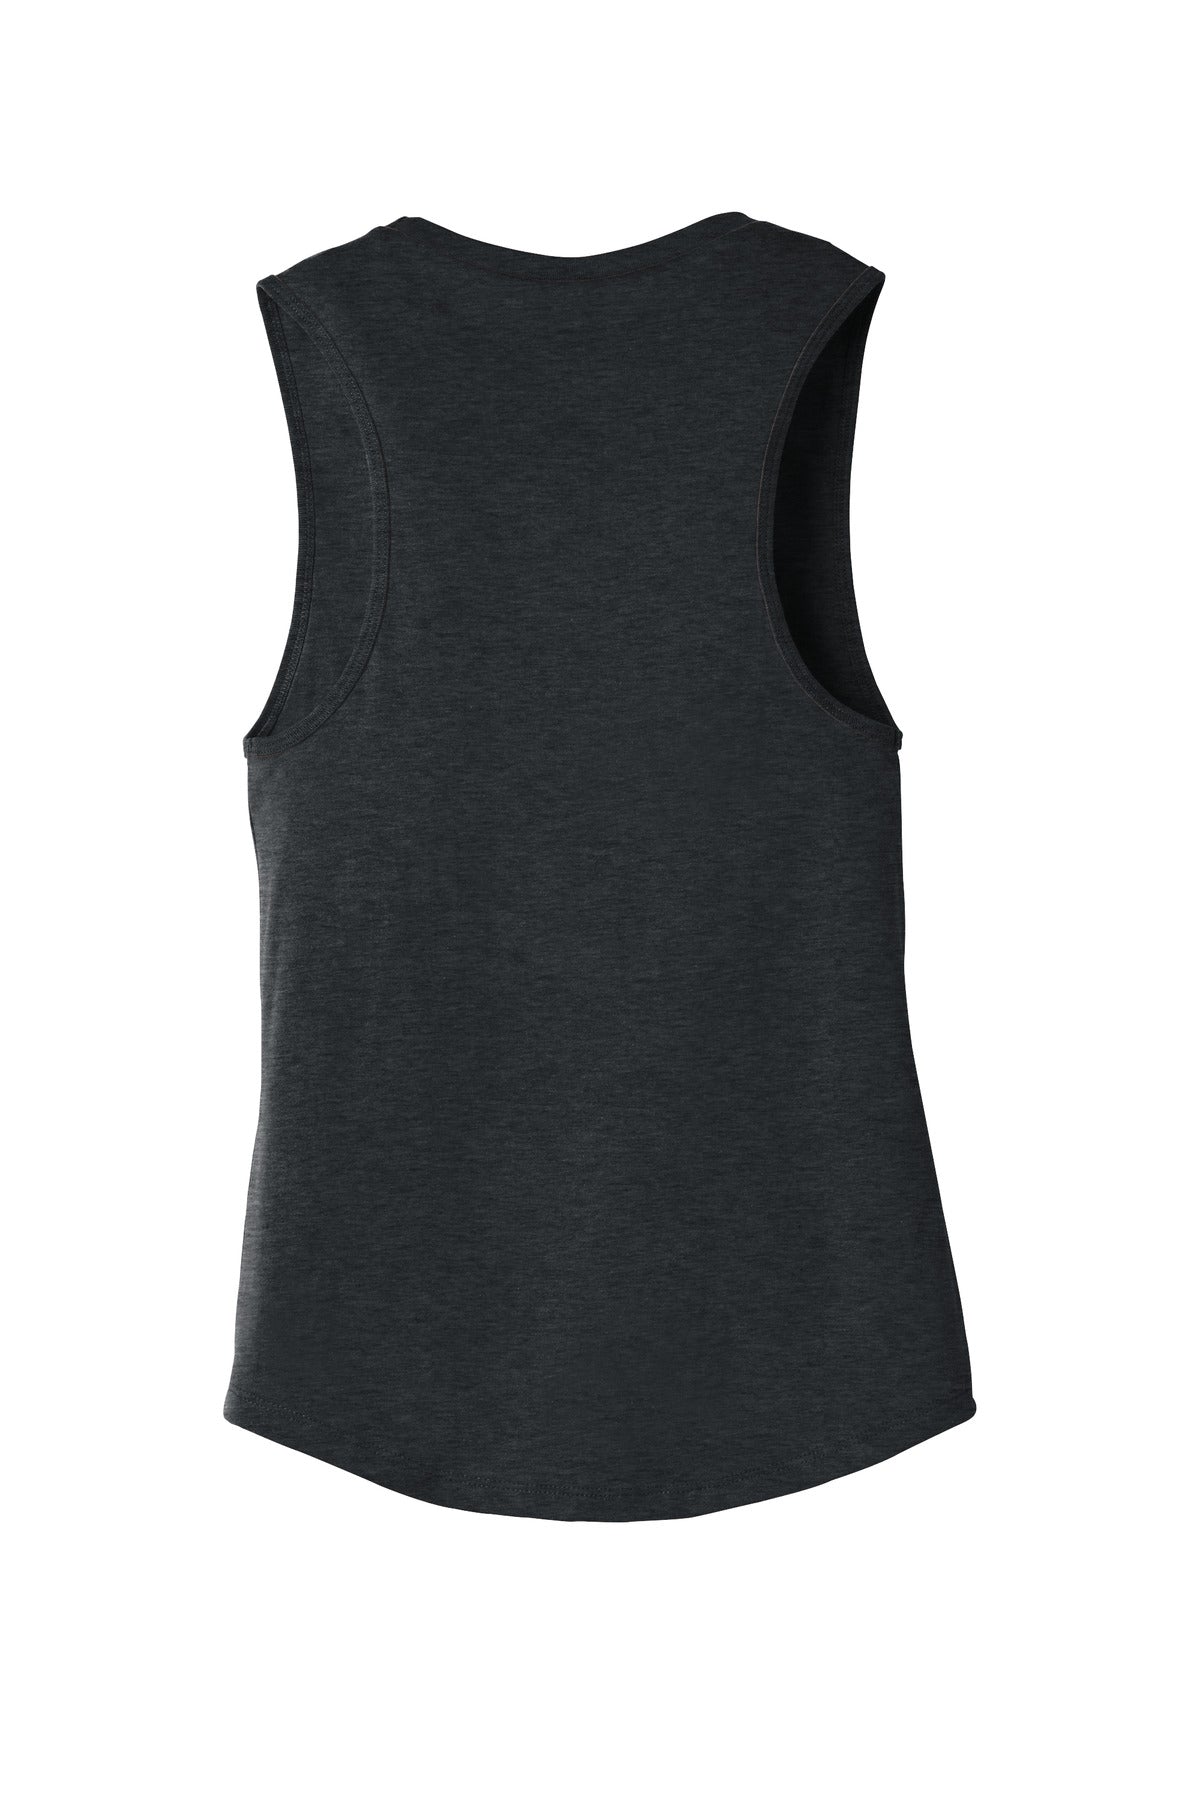 BELLA+CANVAS Women's Jersey Muscle Tank. BC6003 - BT Imprintables Shirts